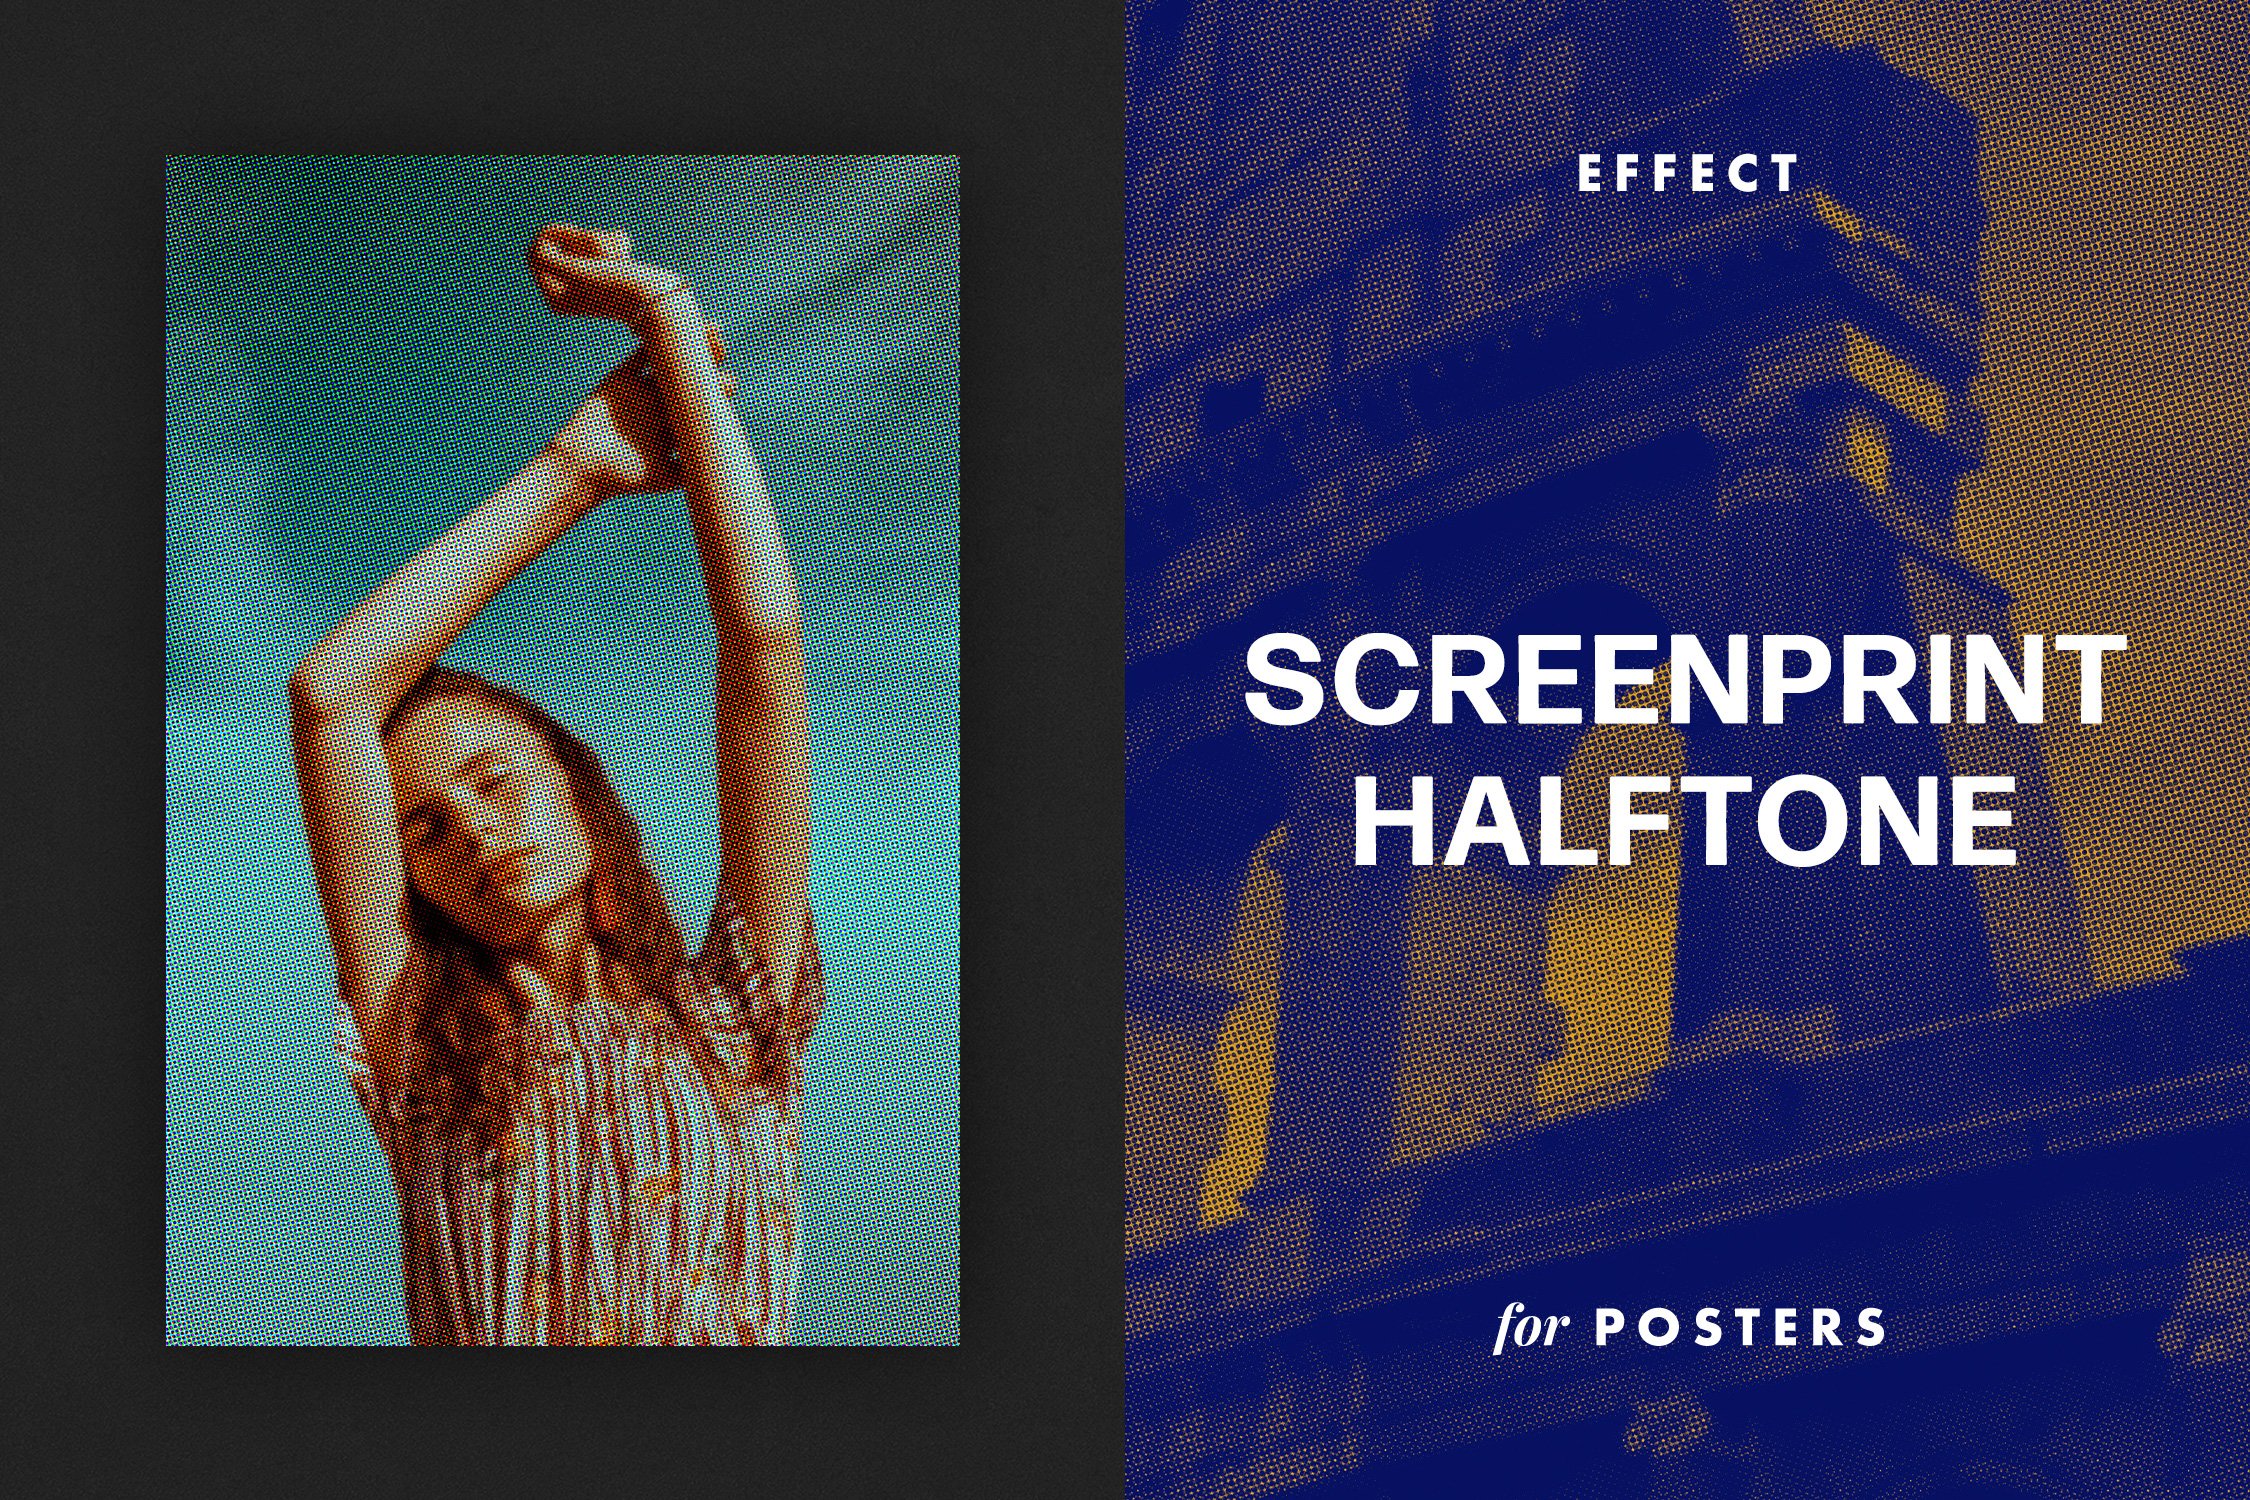 Screenprint Halftone Poster Effectcover image.